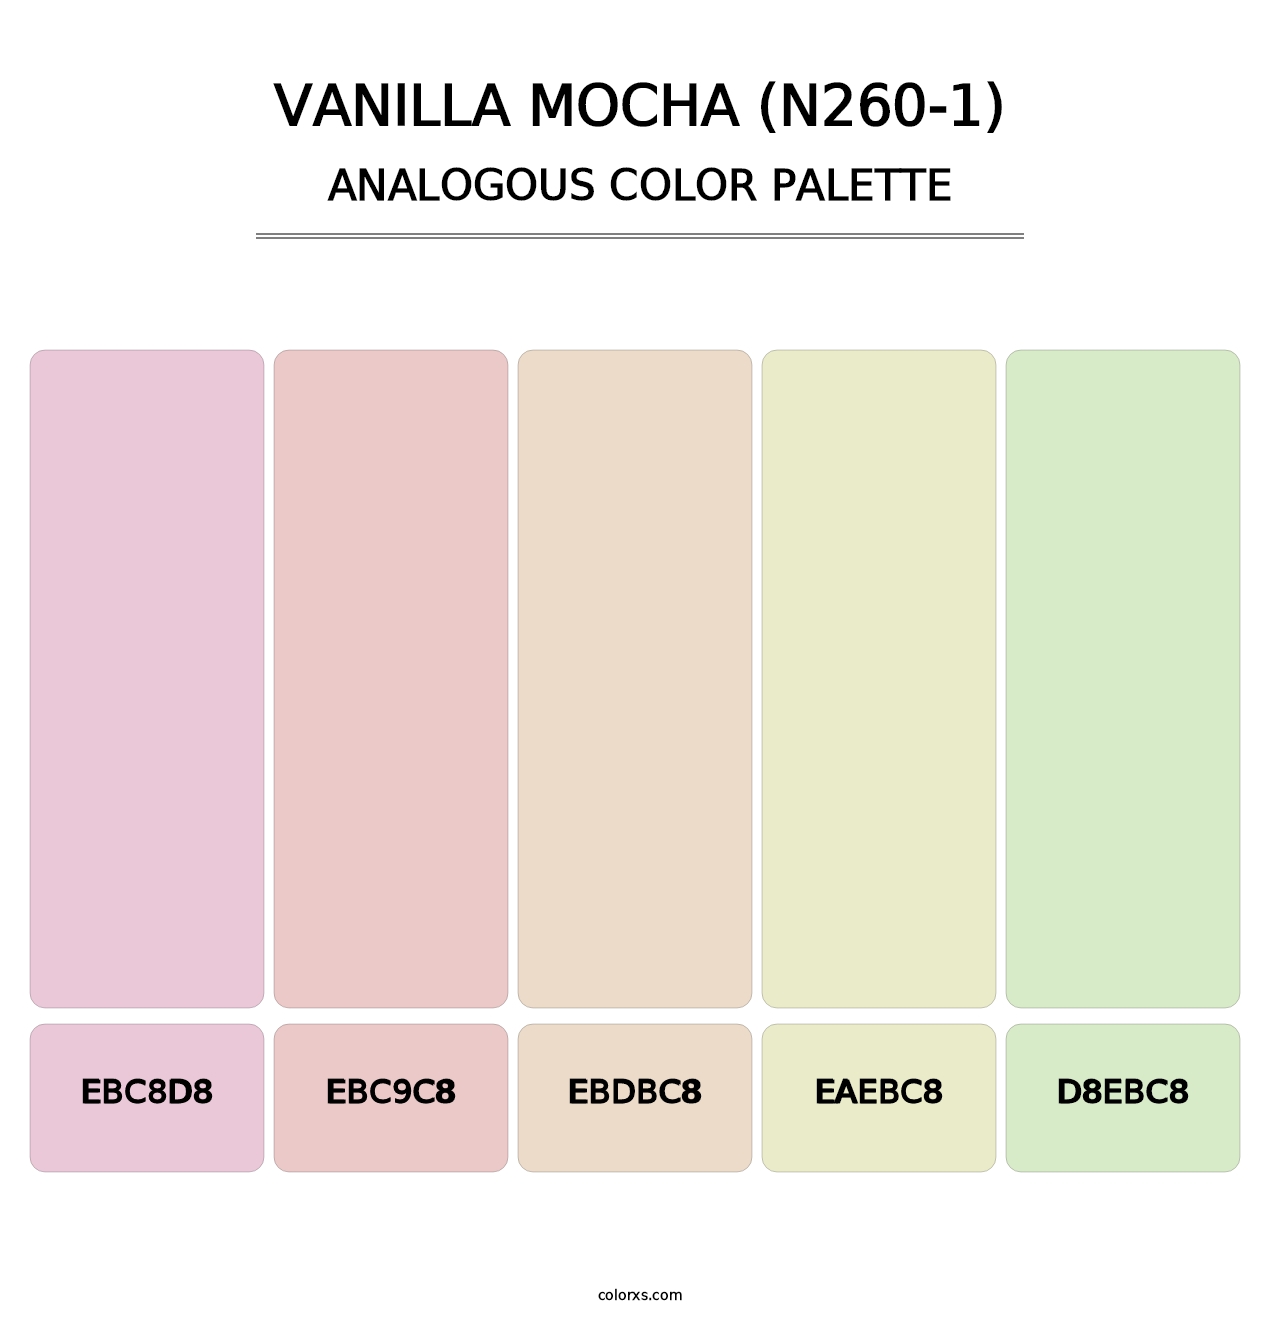 Vanilla Mocha (N260-1) - Analogous Color Palette